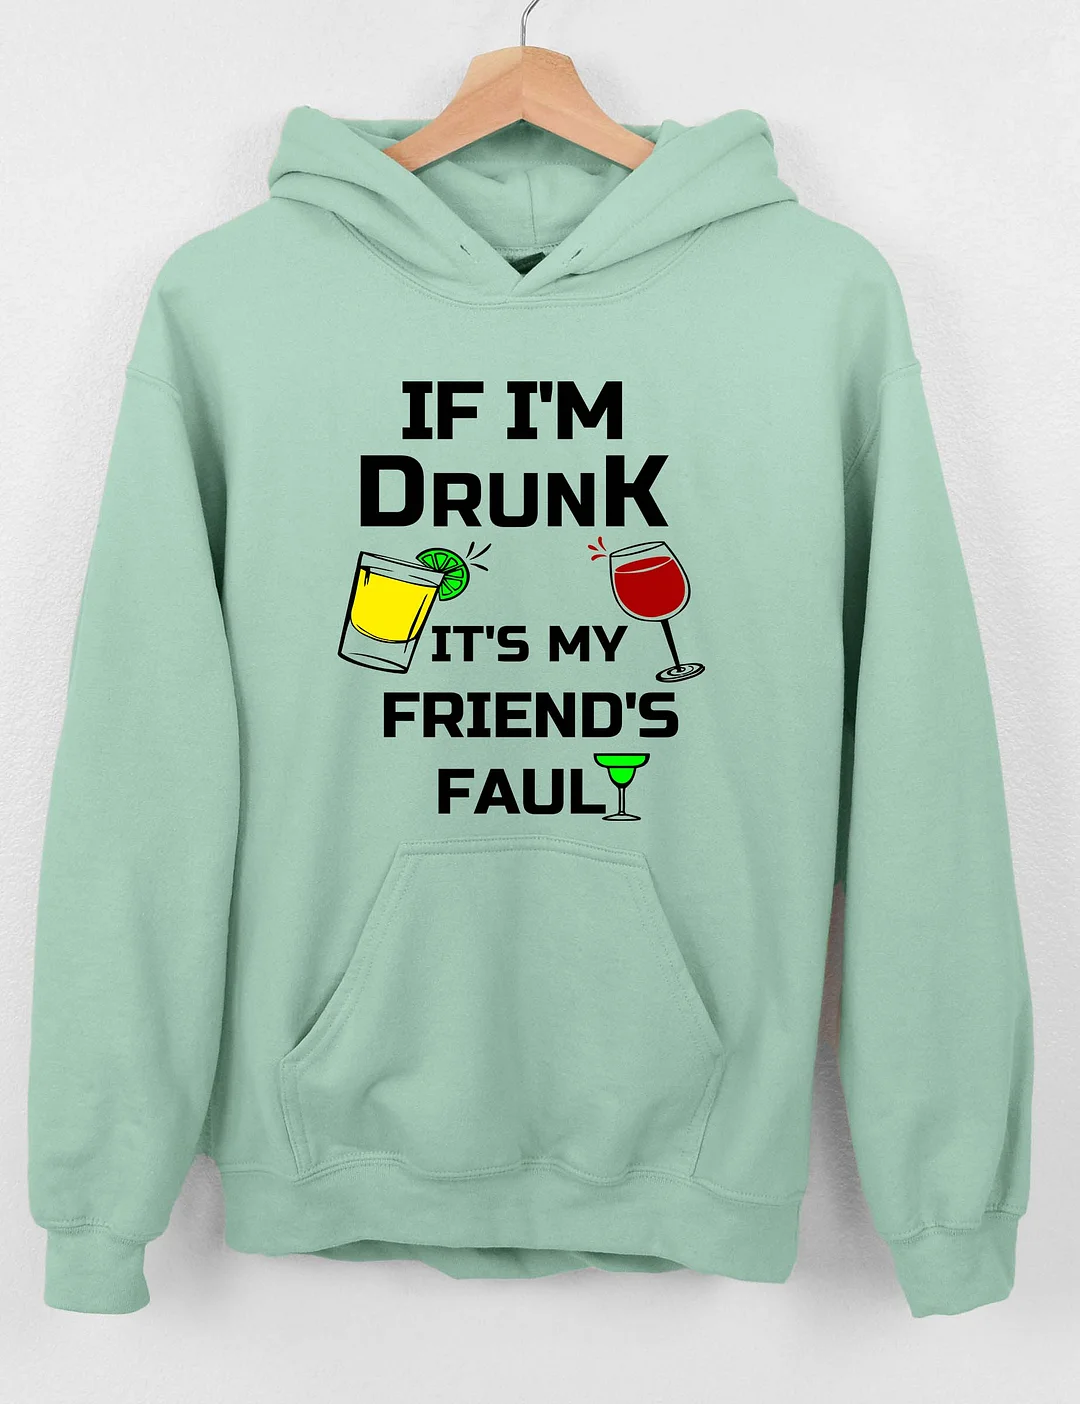 If I'm Drunk It's My Friend's Fault Hoodie